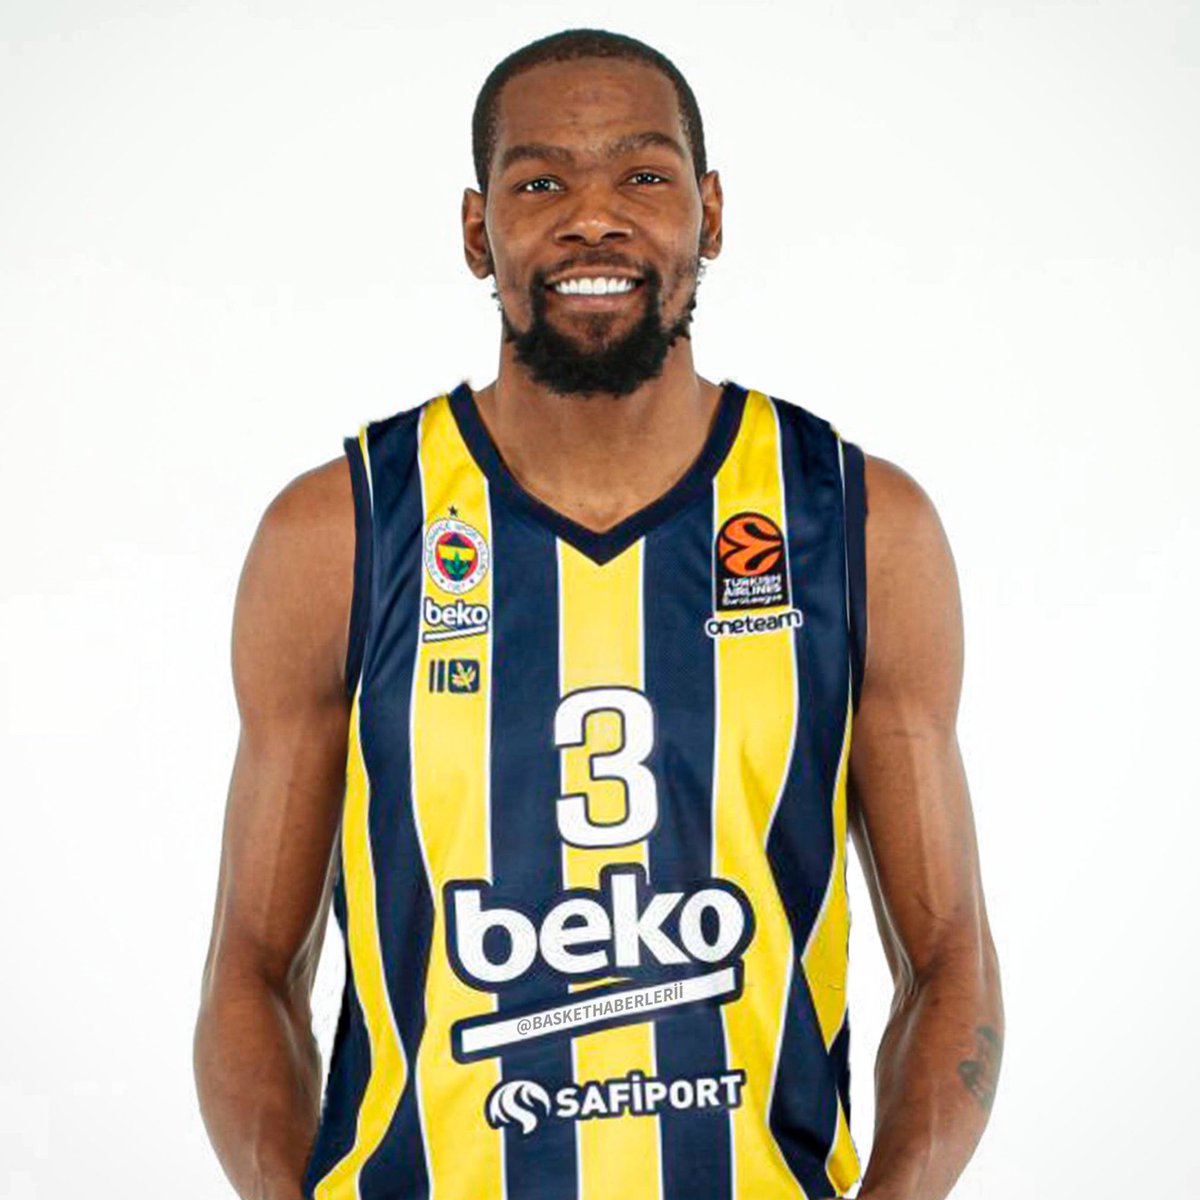 Mike James: “Kevin Durant, Fenerbahçe’de oynamak istedi.”